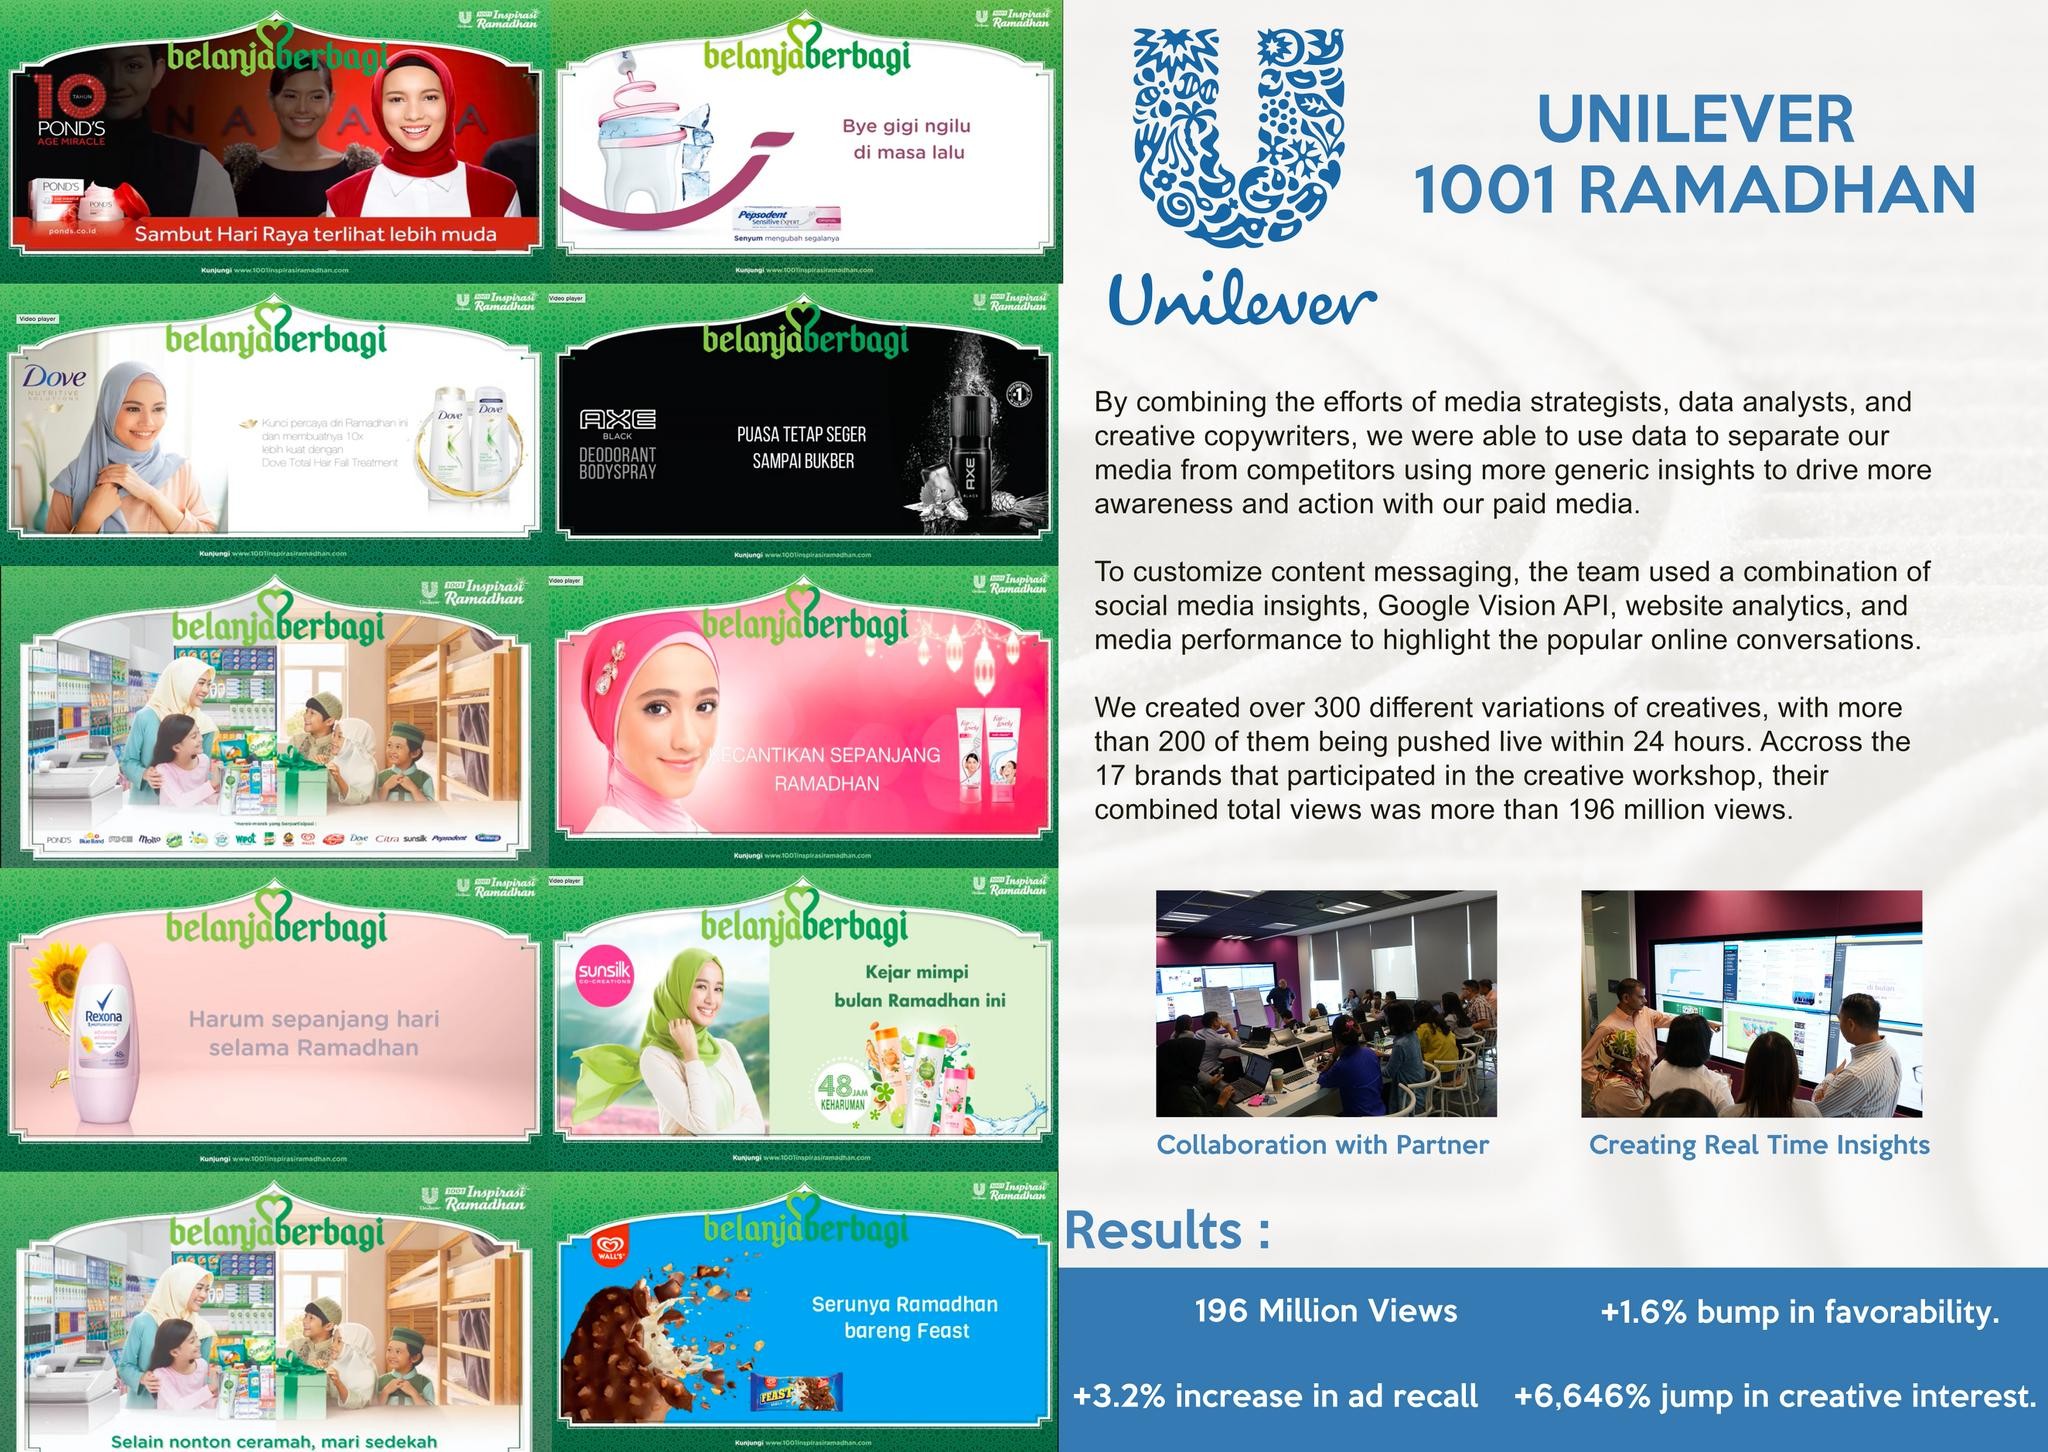 Unilever 1001 Inspirasi Ramadhan